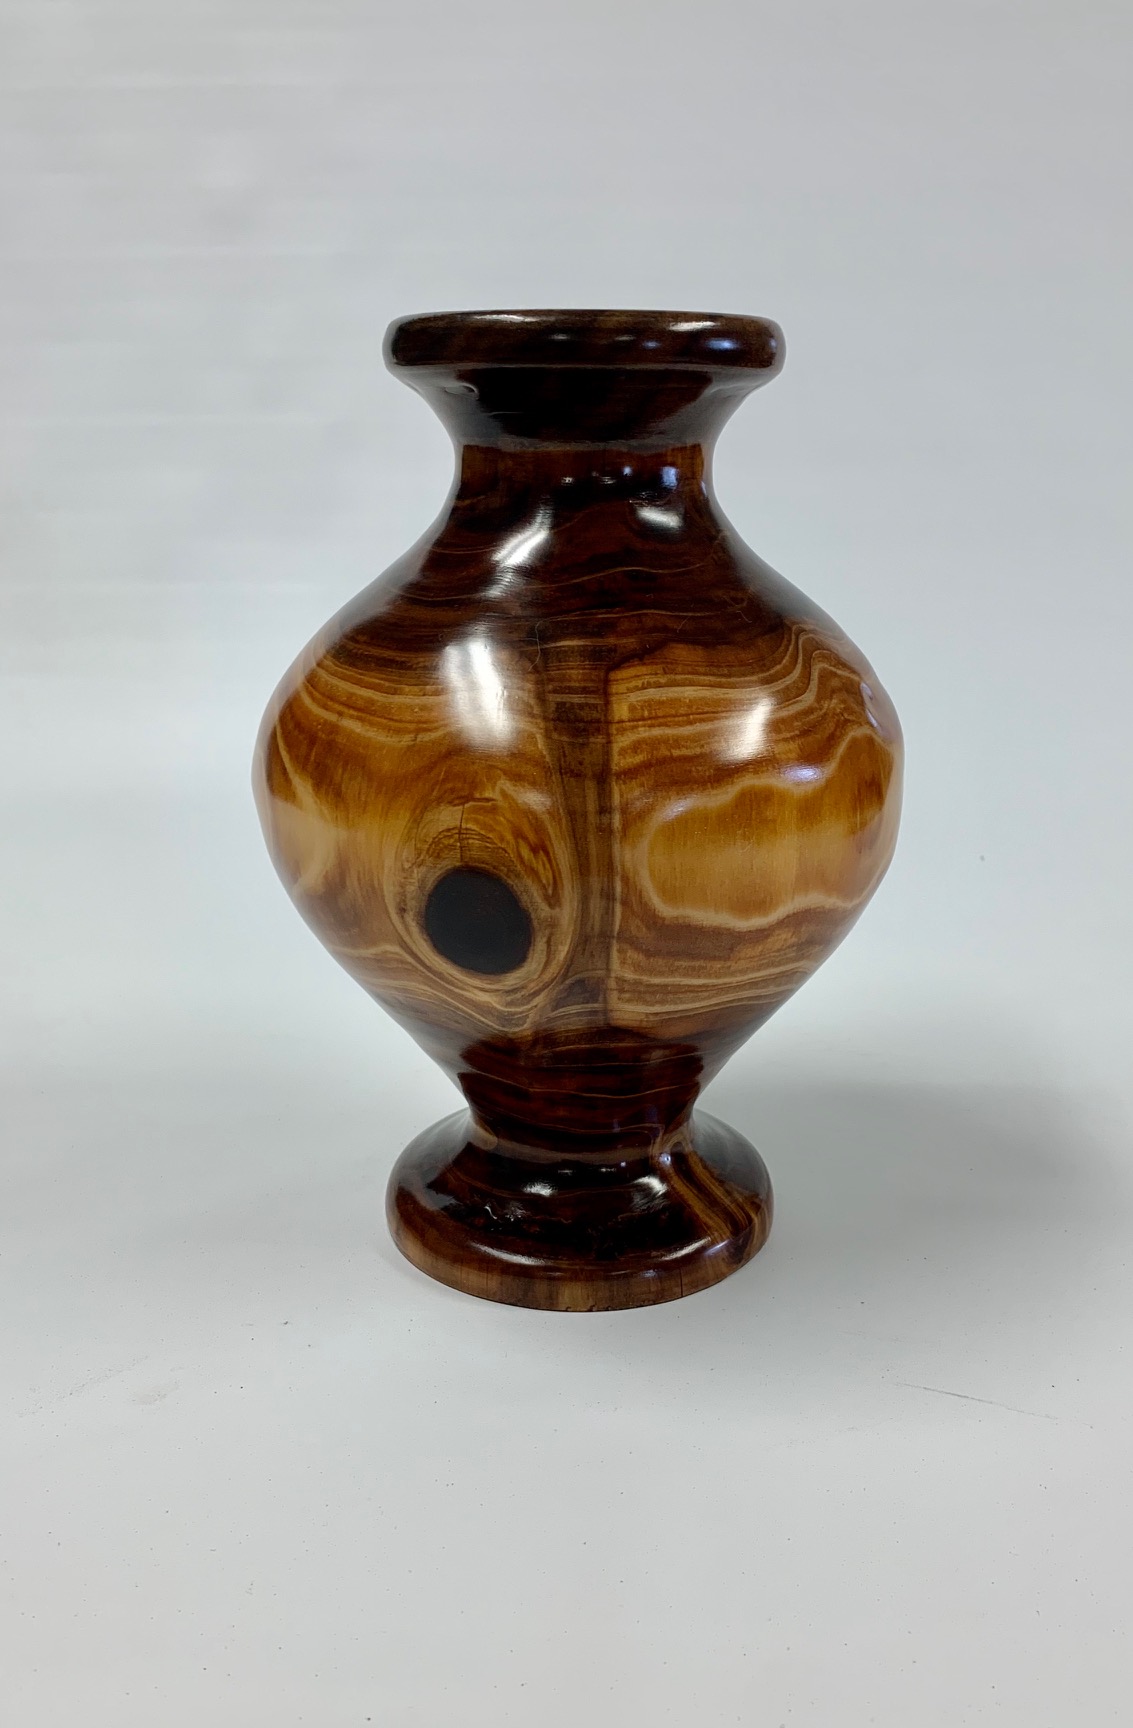 Hollow form vase in Japanese cedar